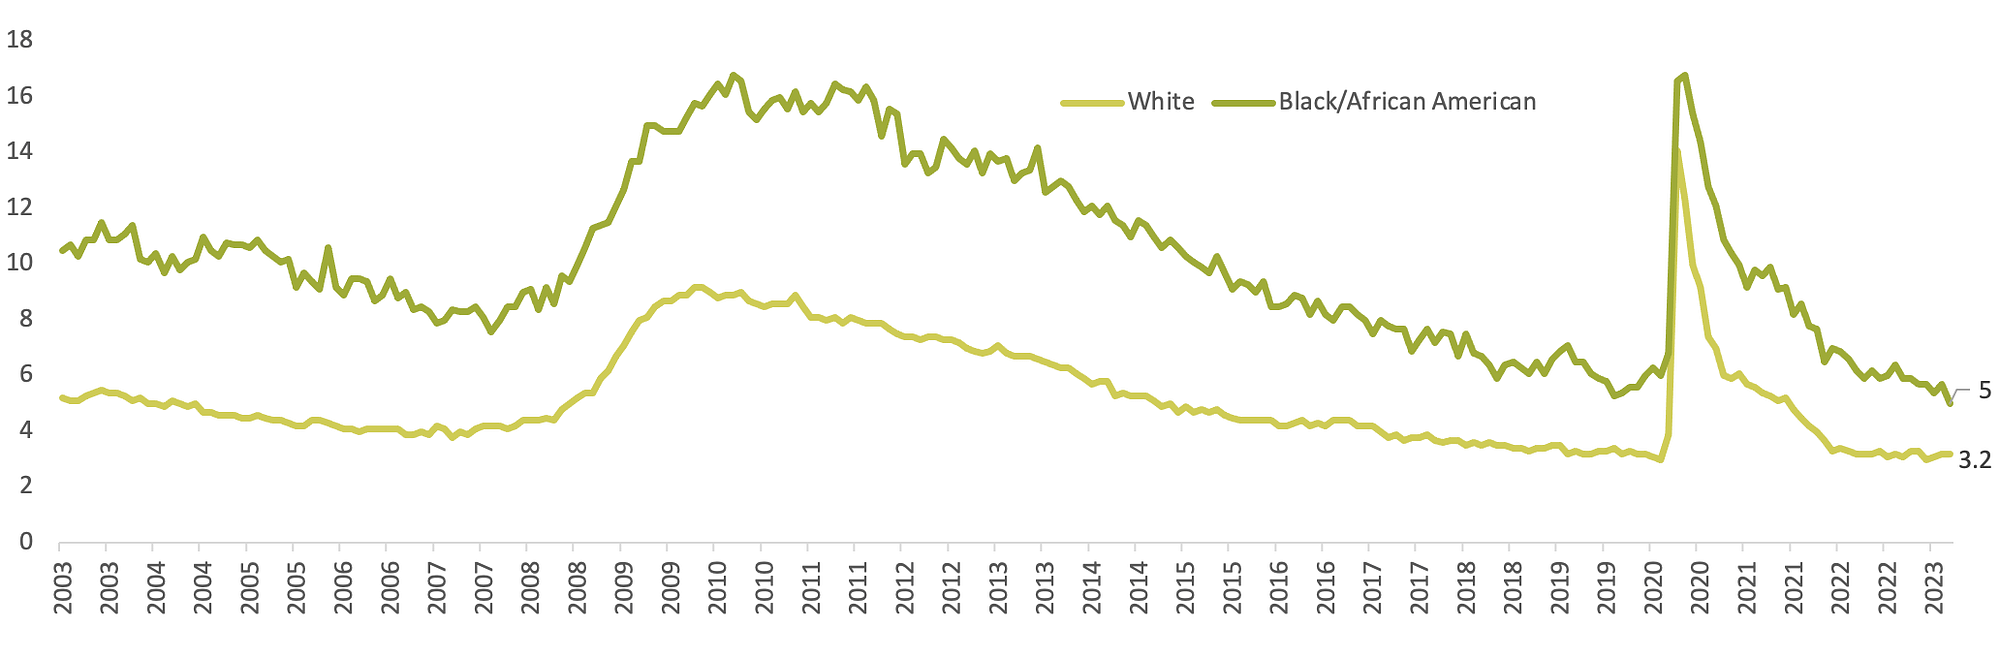 US Unemployment Rate, Seasonally Adjusted Percentage